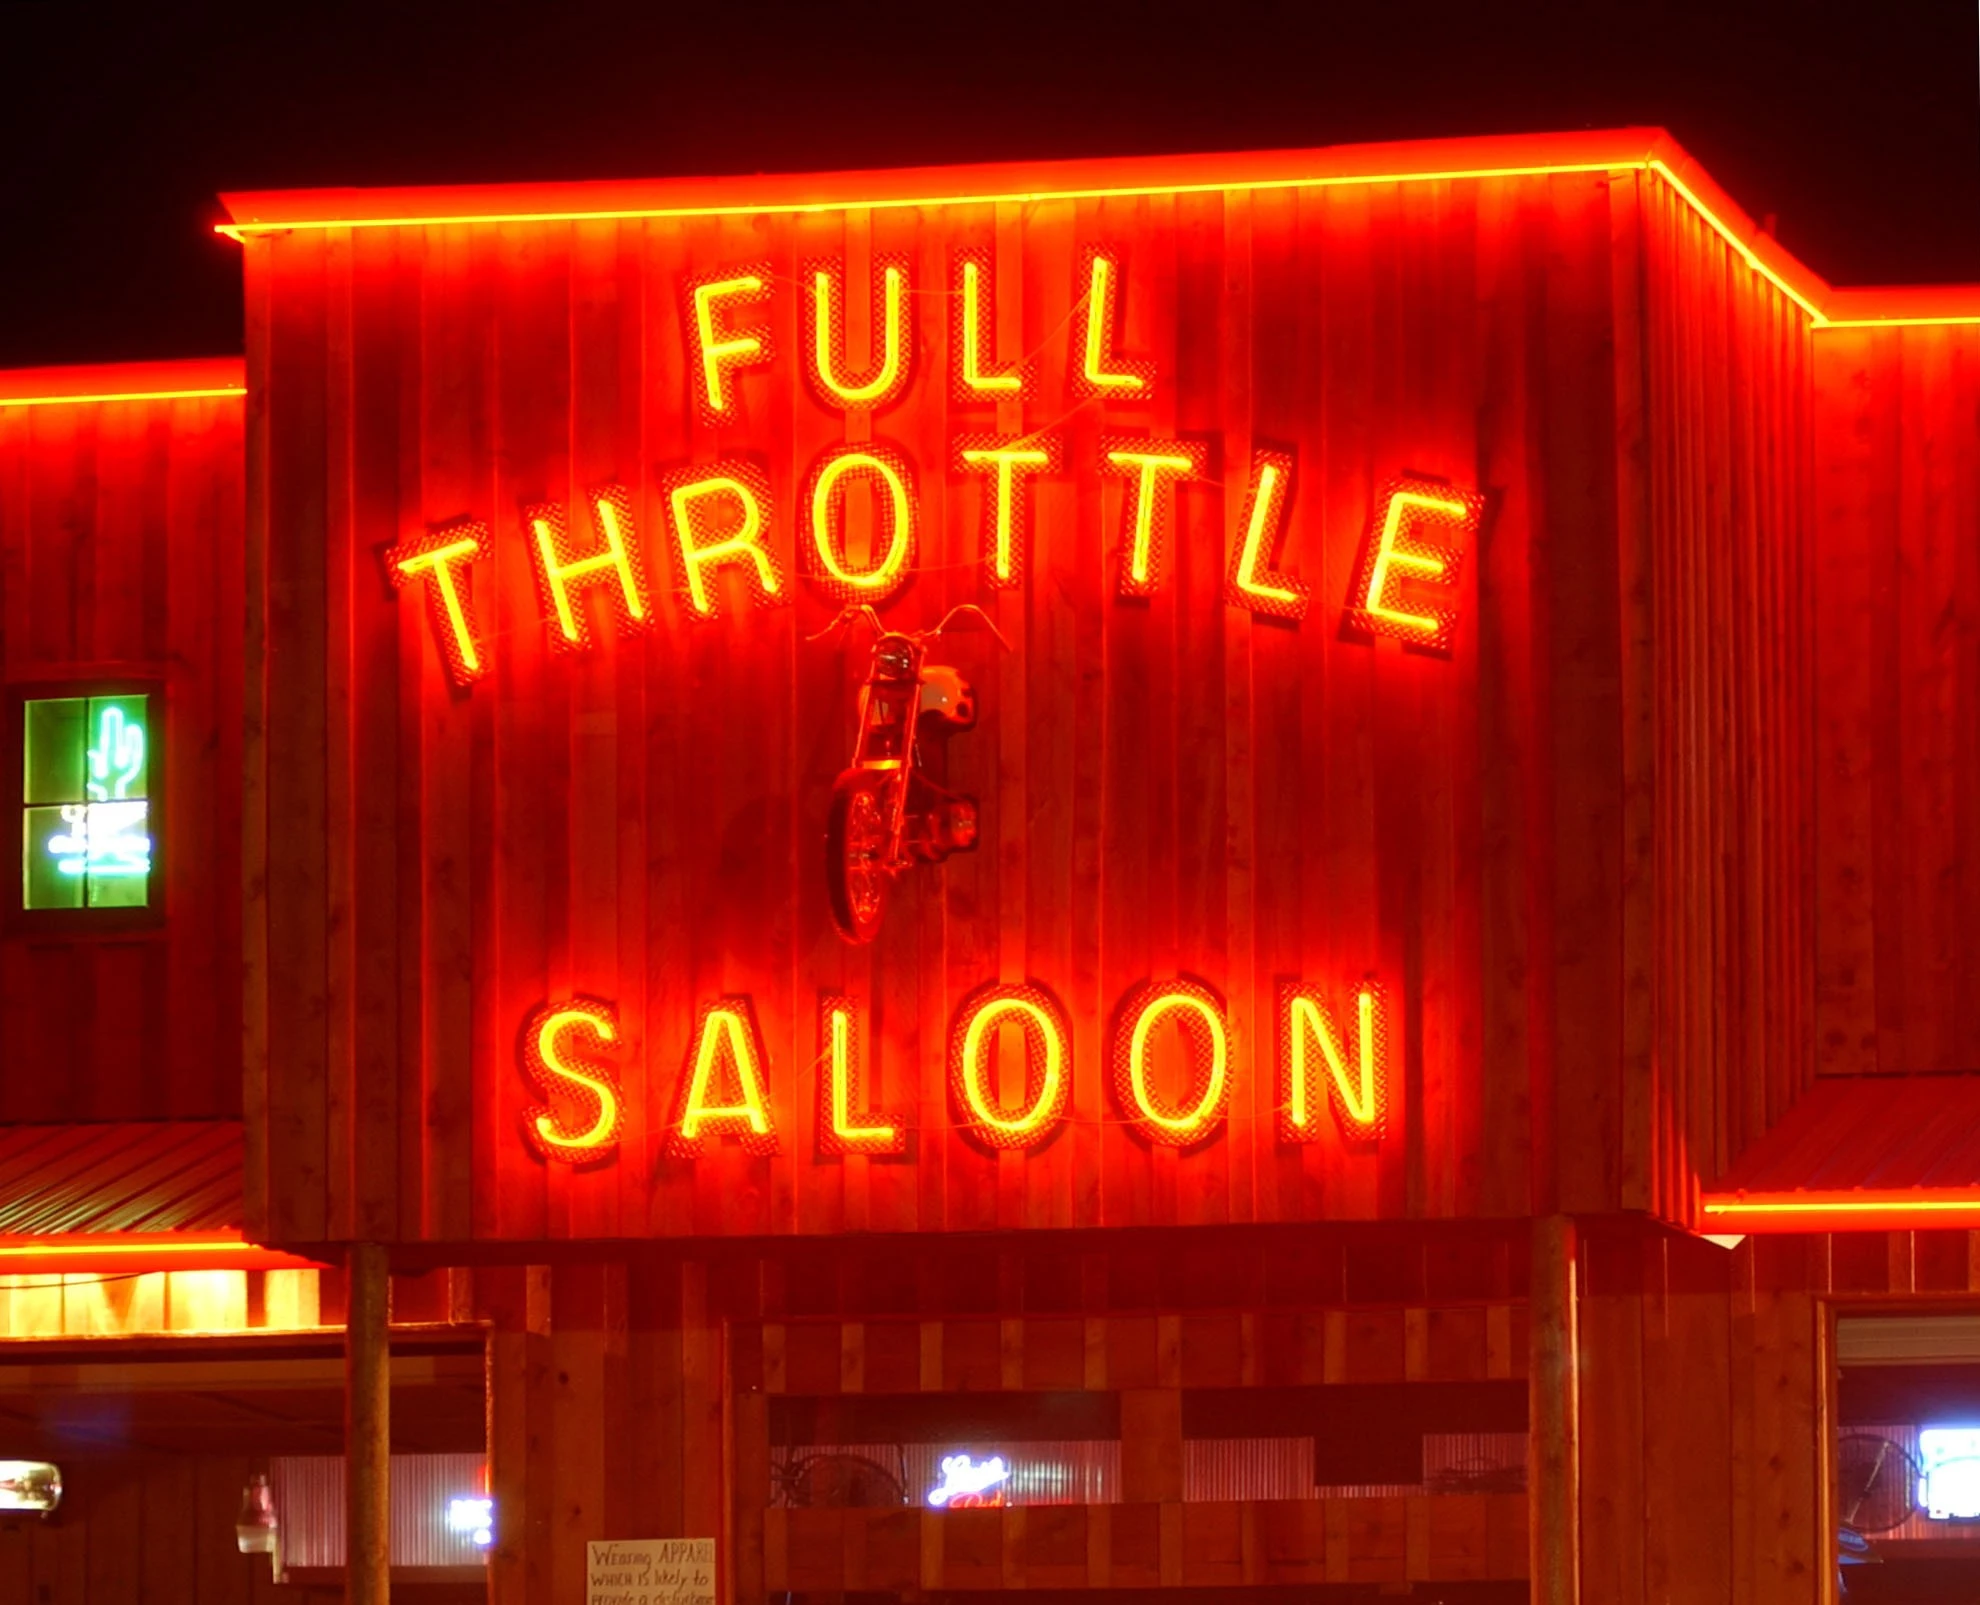 download throttle saloon